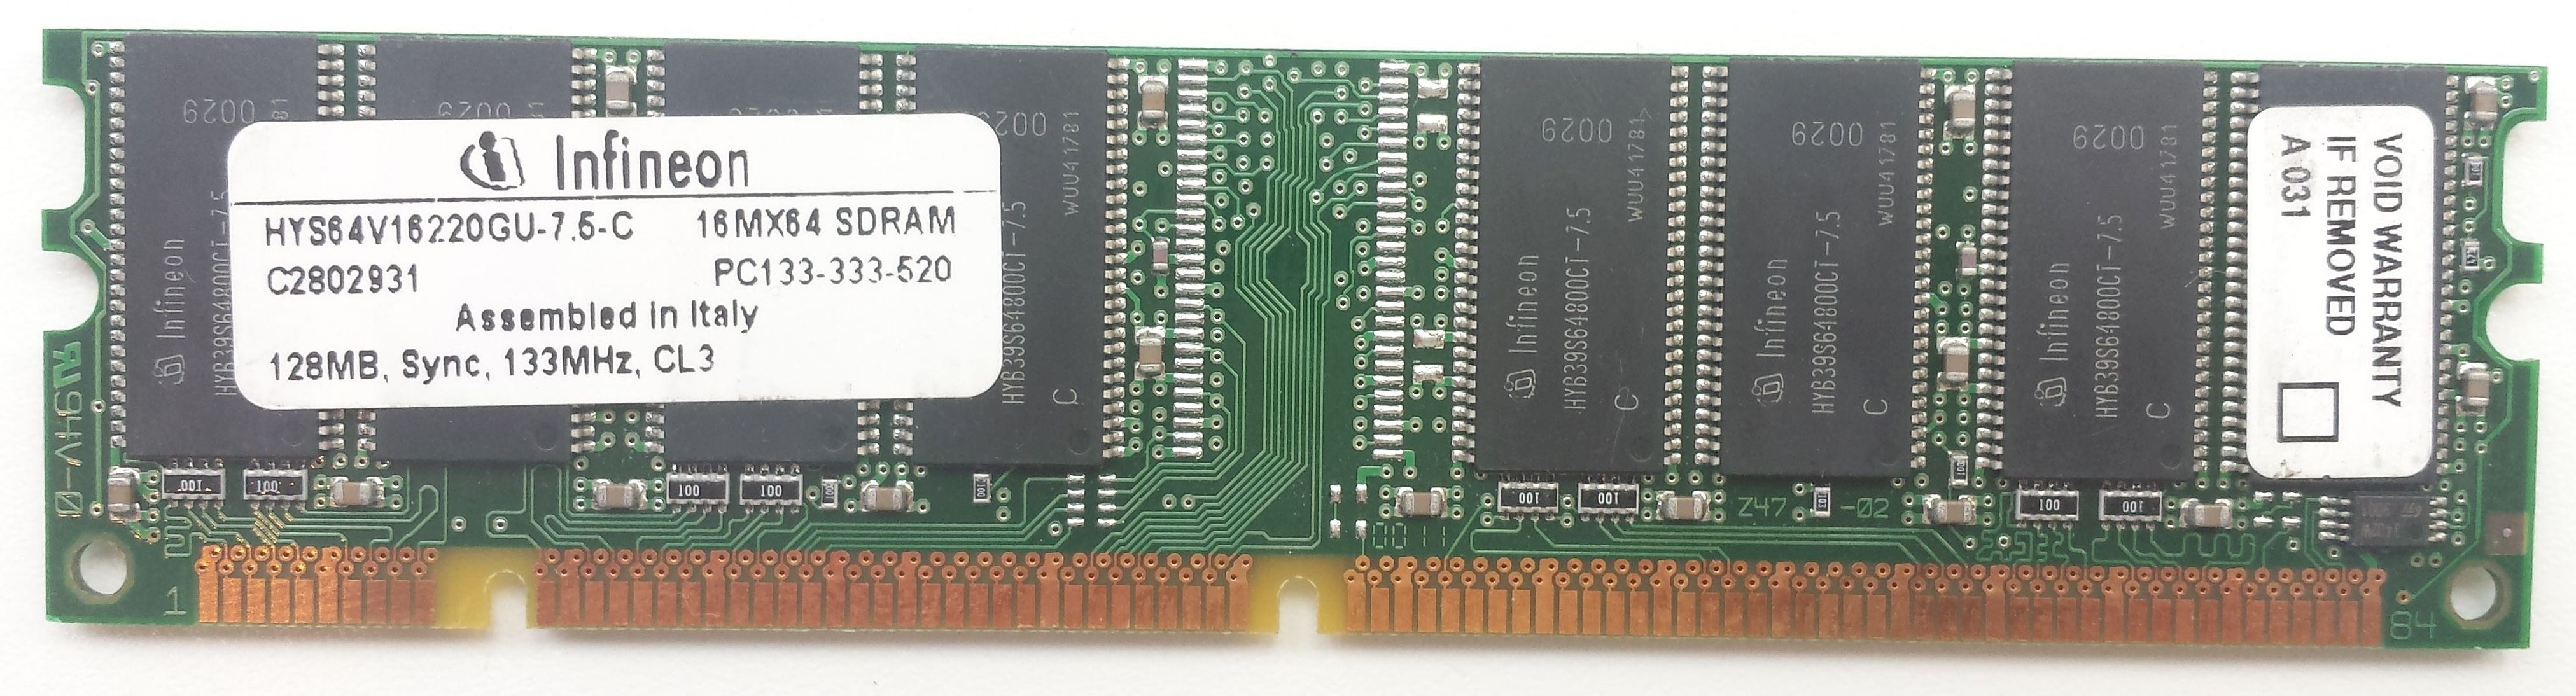 SDRAM 128MB 133Mhz / Infineon HYS64V16220GU-7.5-C